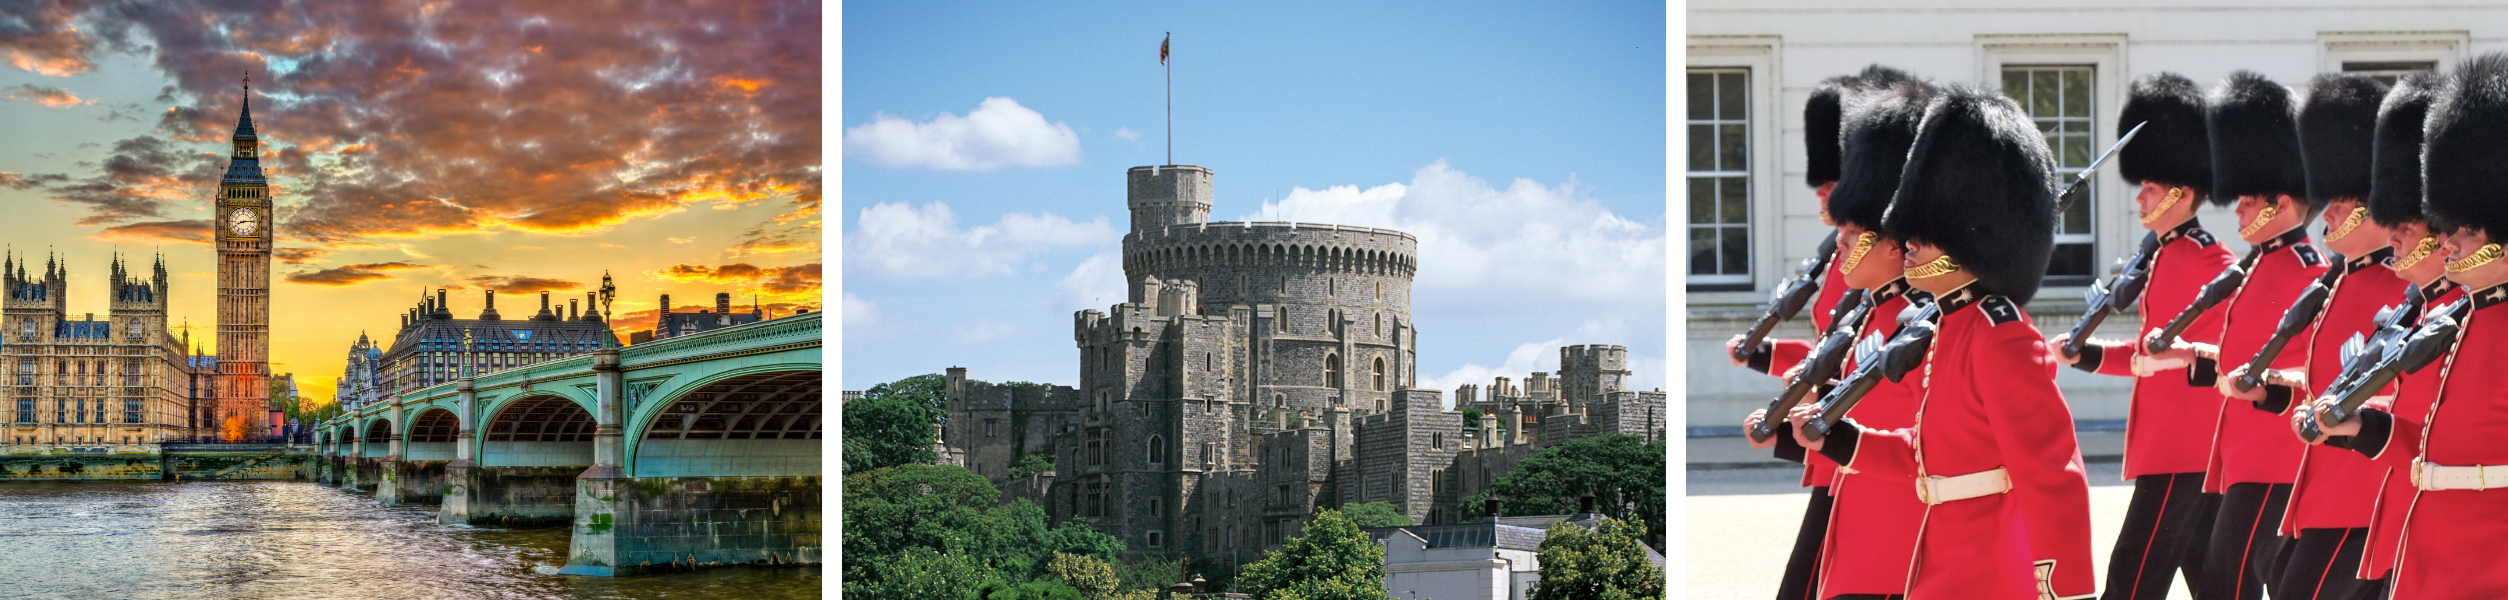 England Trip 2023 - banner with Big Ben, Windsor Castle, Royal Guard